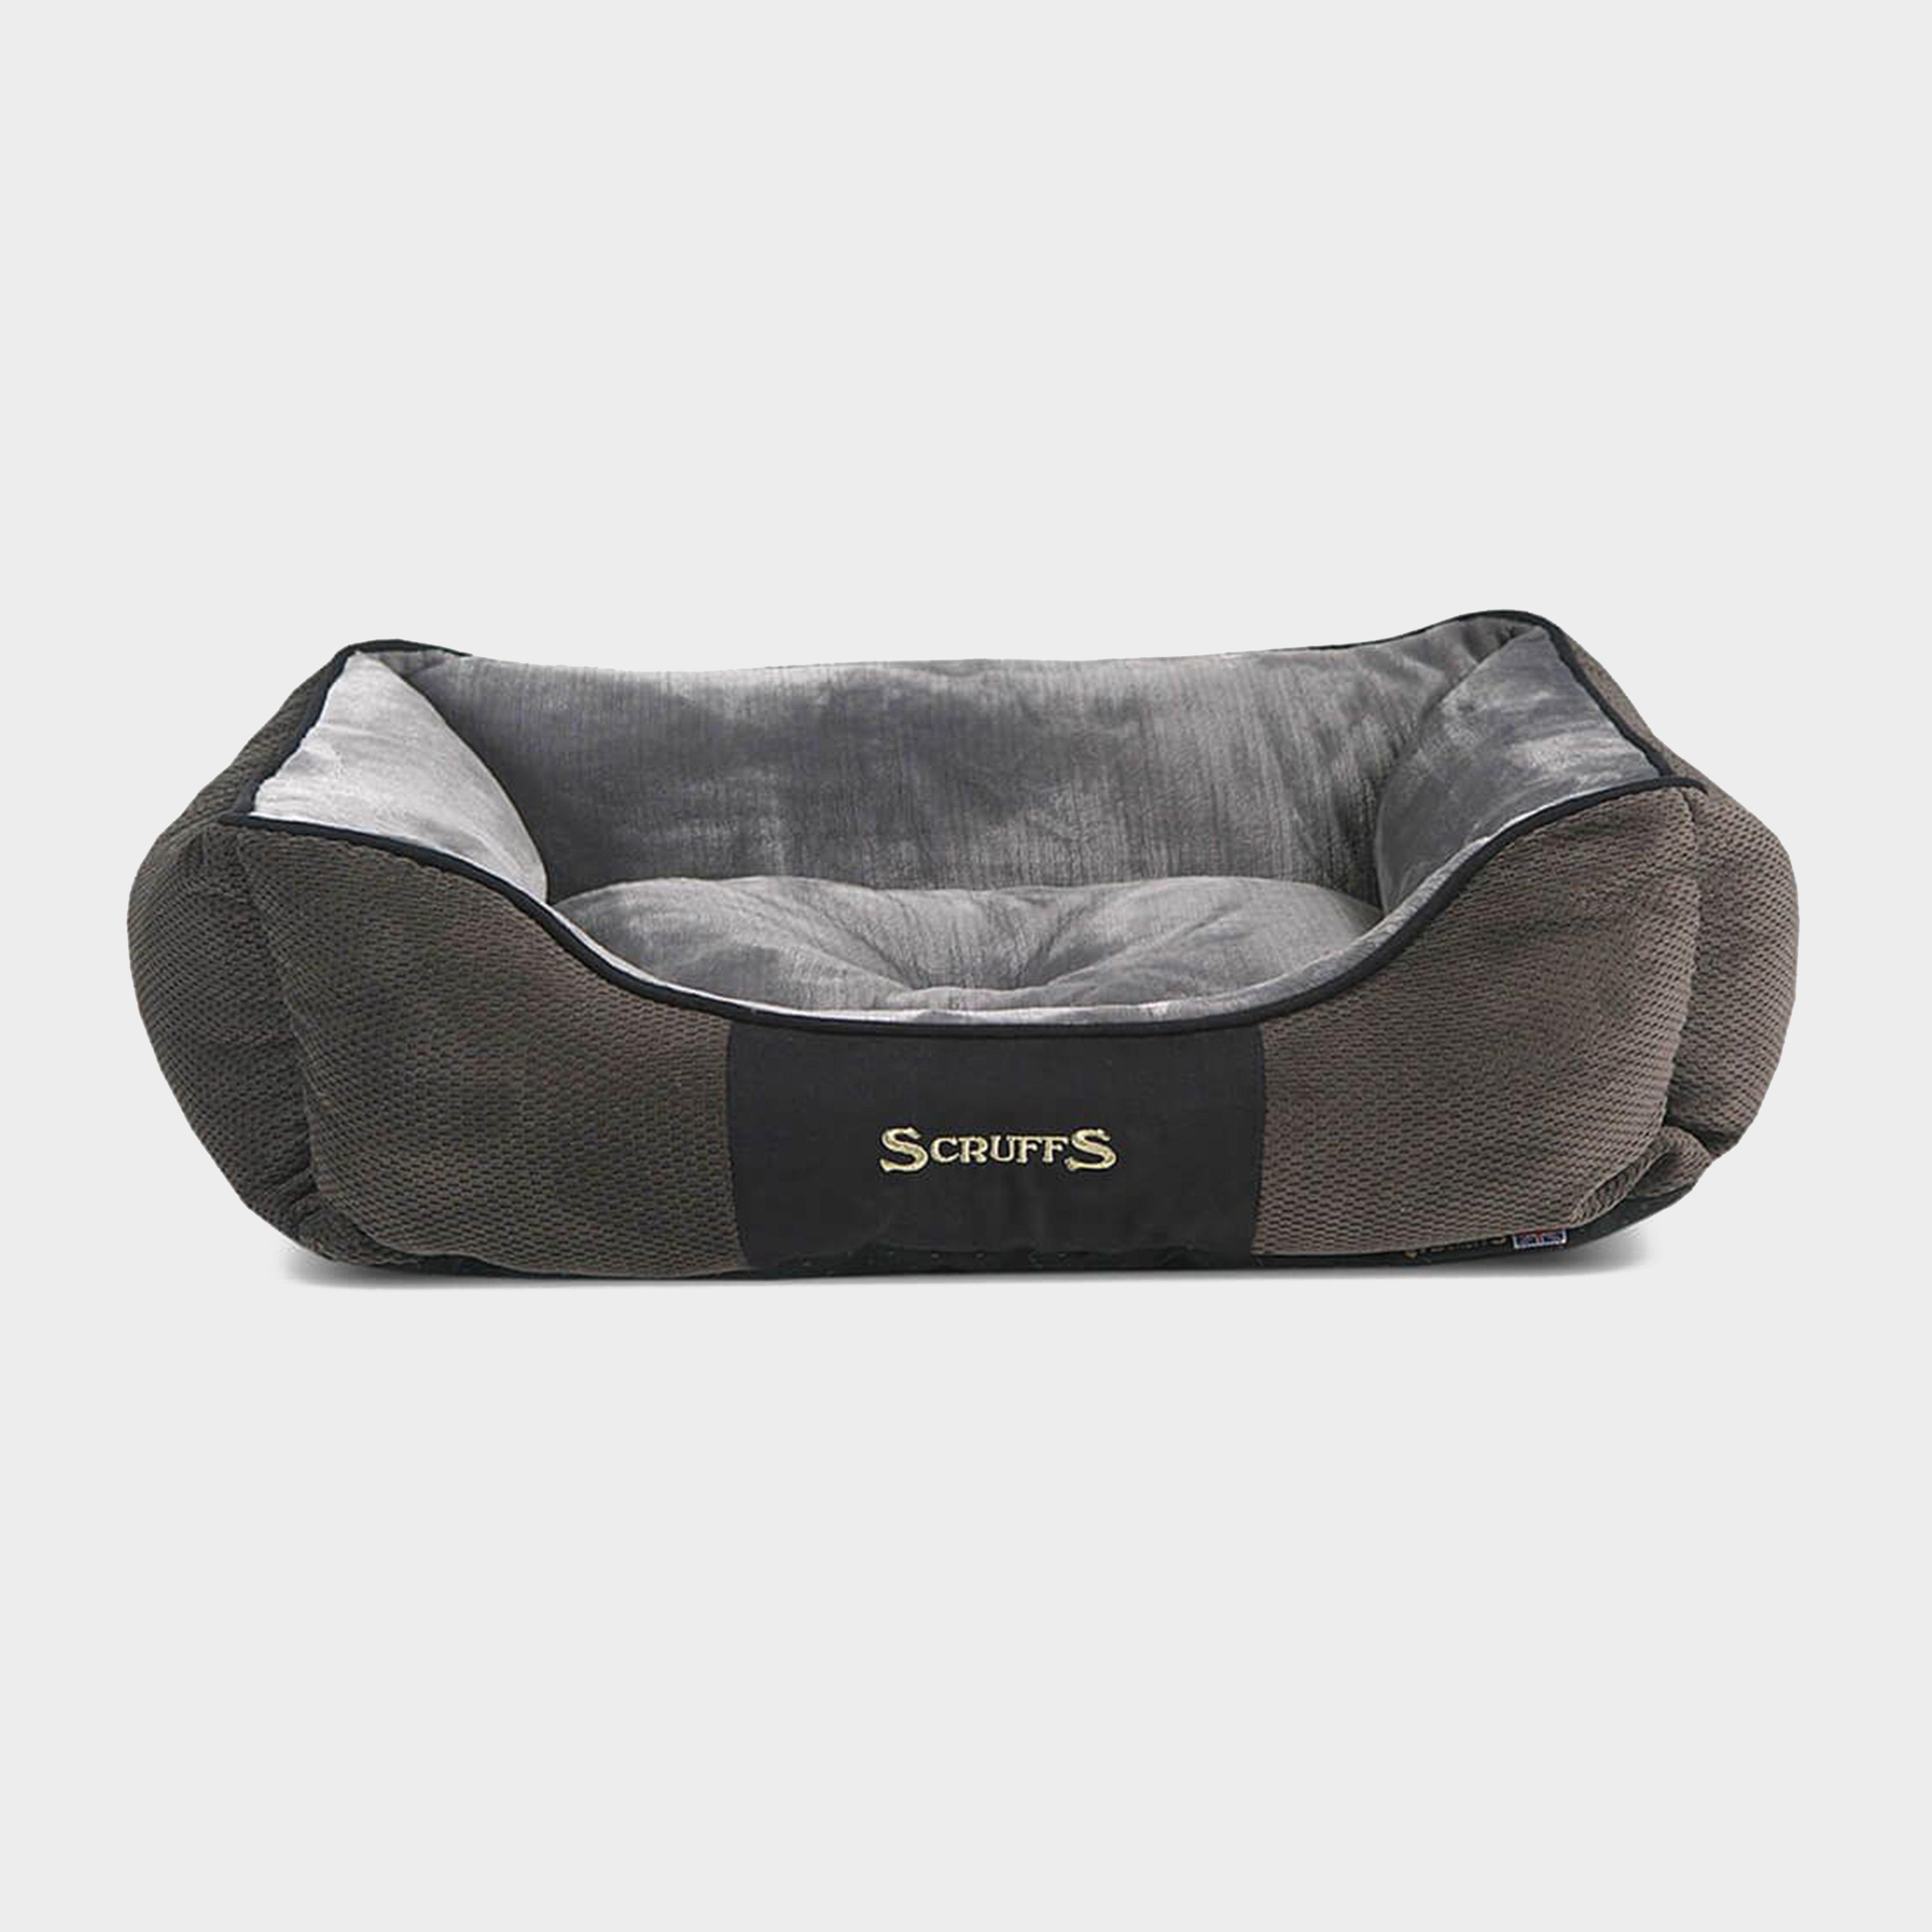  Scruffs Chester Dog Bed Medium, Grey